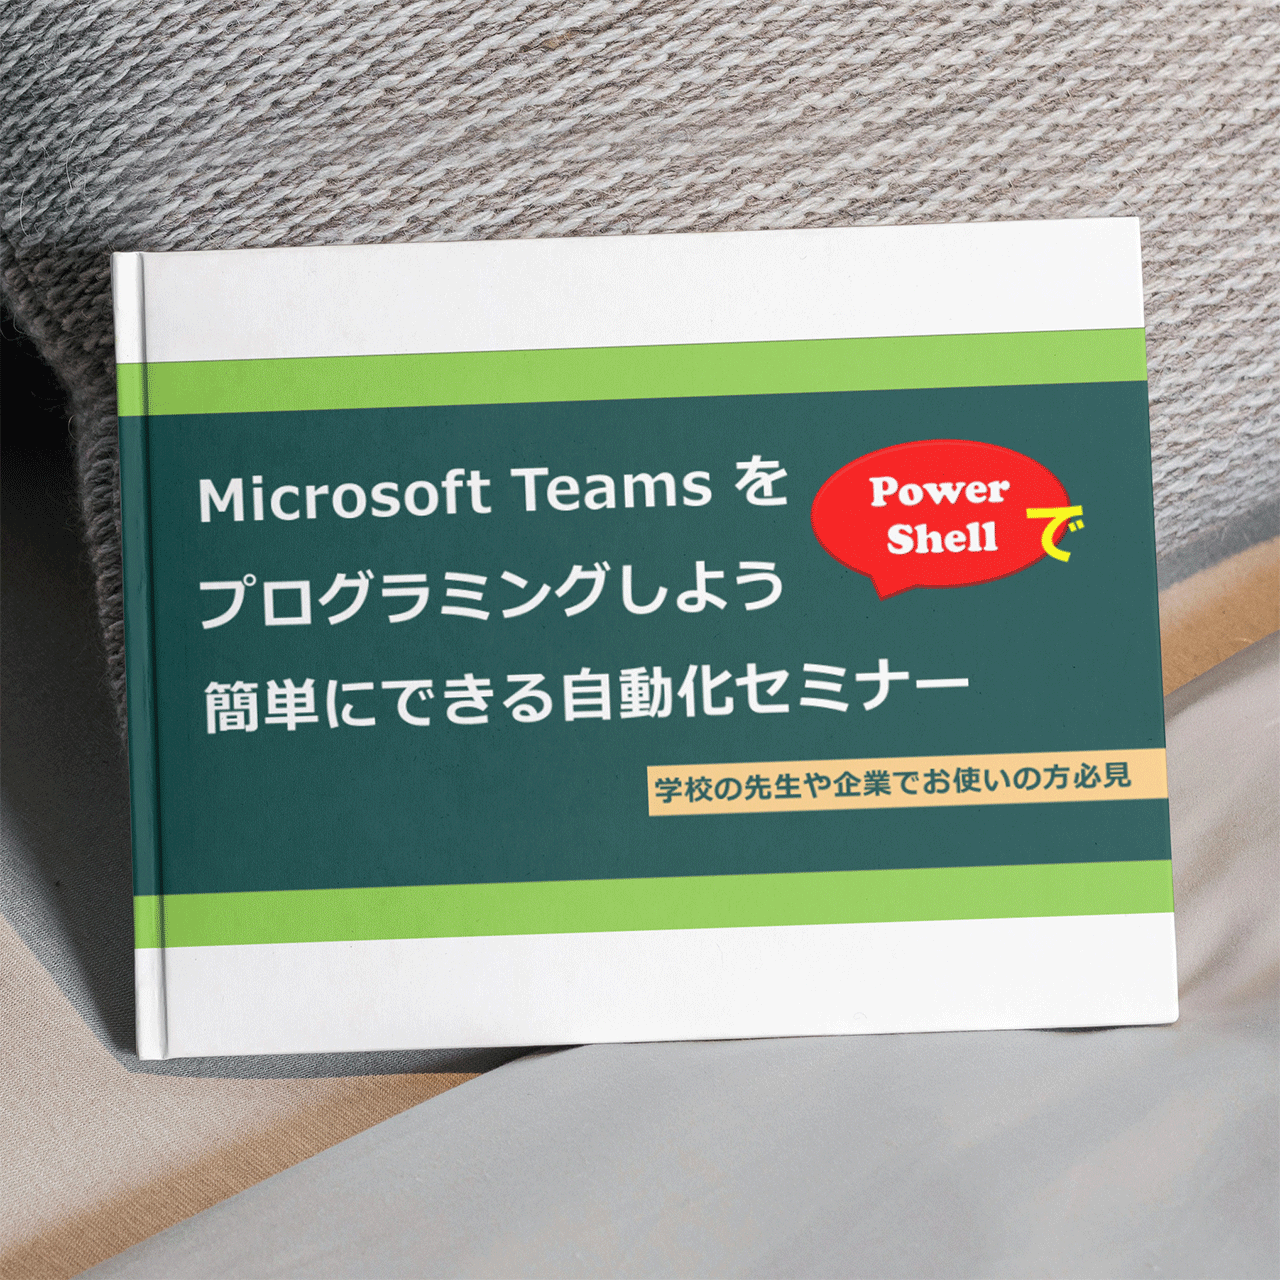 Microsoft TeamsをPowerShellでプログラミングしよう 簡単にできる自動化セミナー 応用編 Kindle版